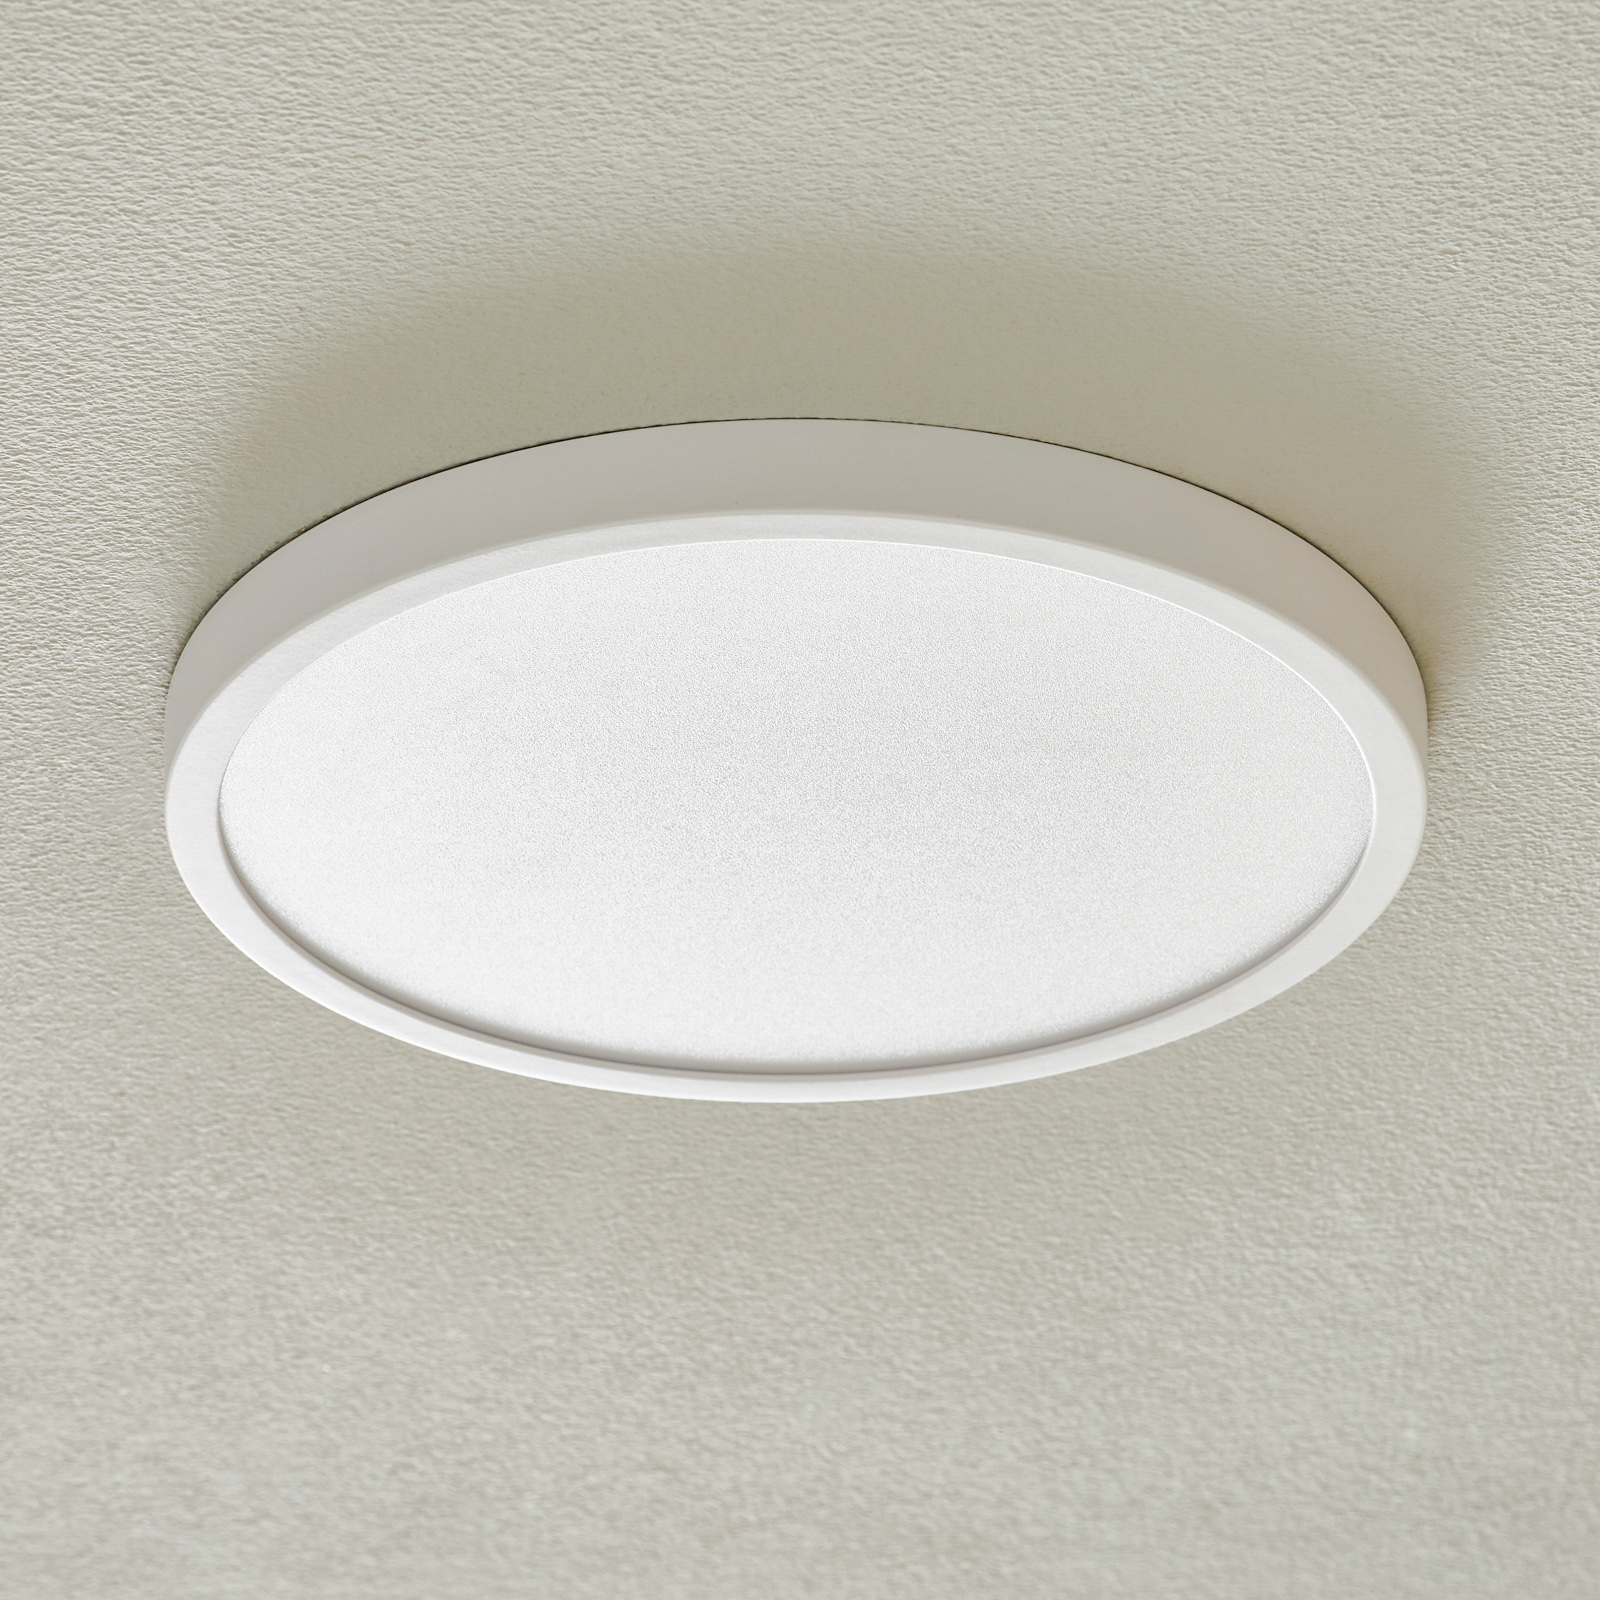 Lampa sufitowa LED Vika, okrągła, biała, Ø 30cm